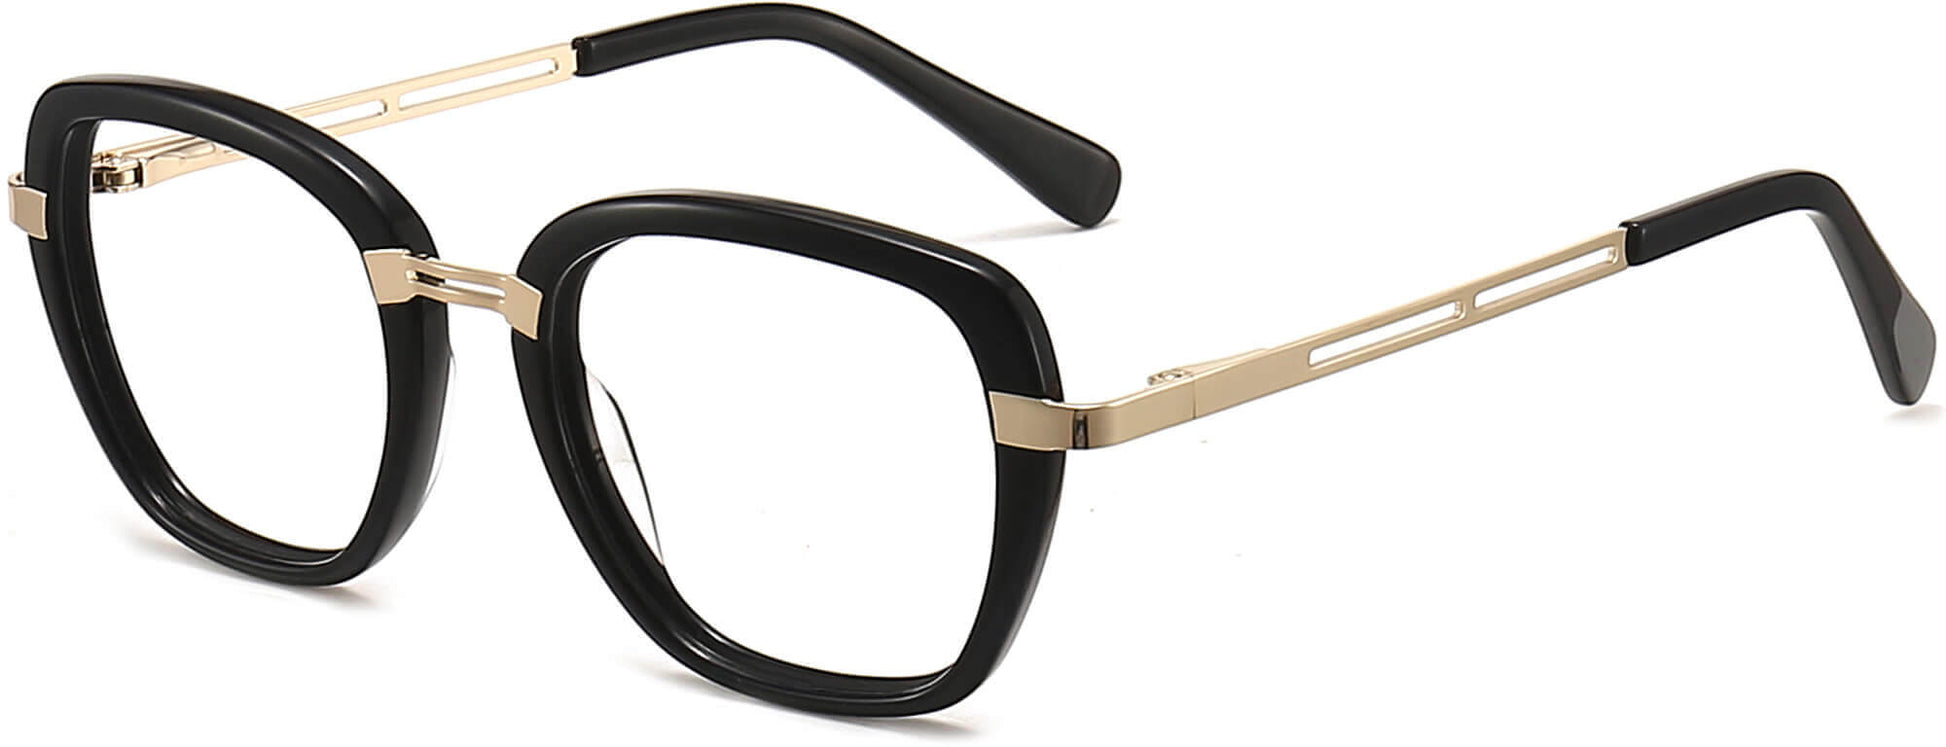 Myla Cateye Black Eyeglasses from ANRRI, angle view